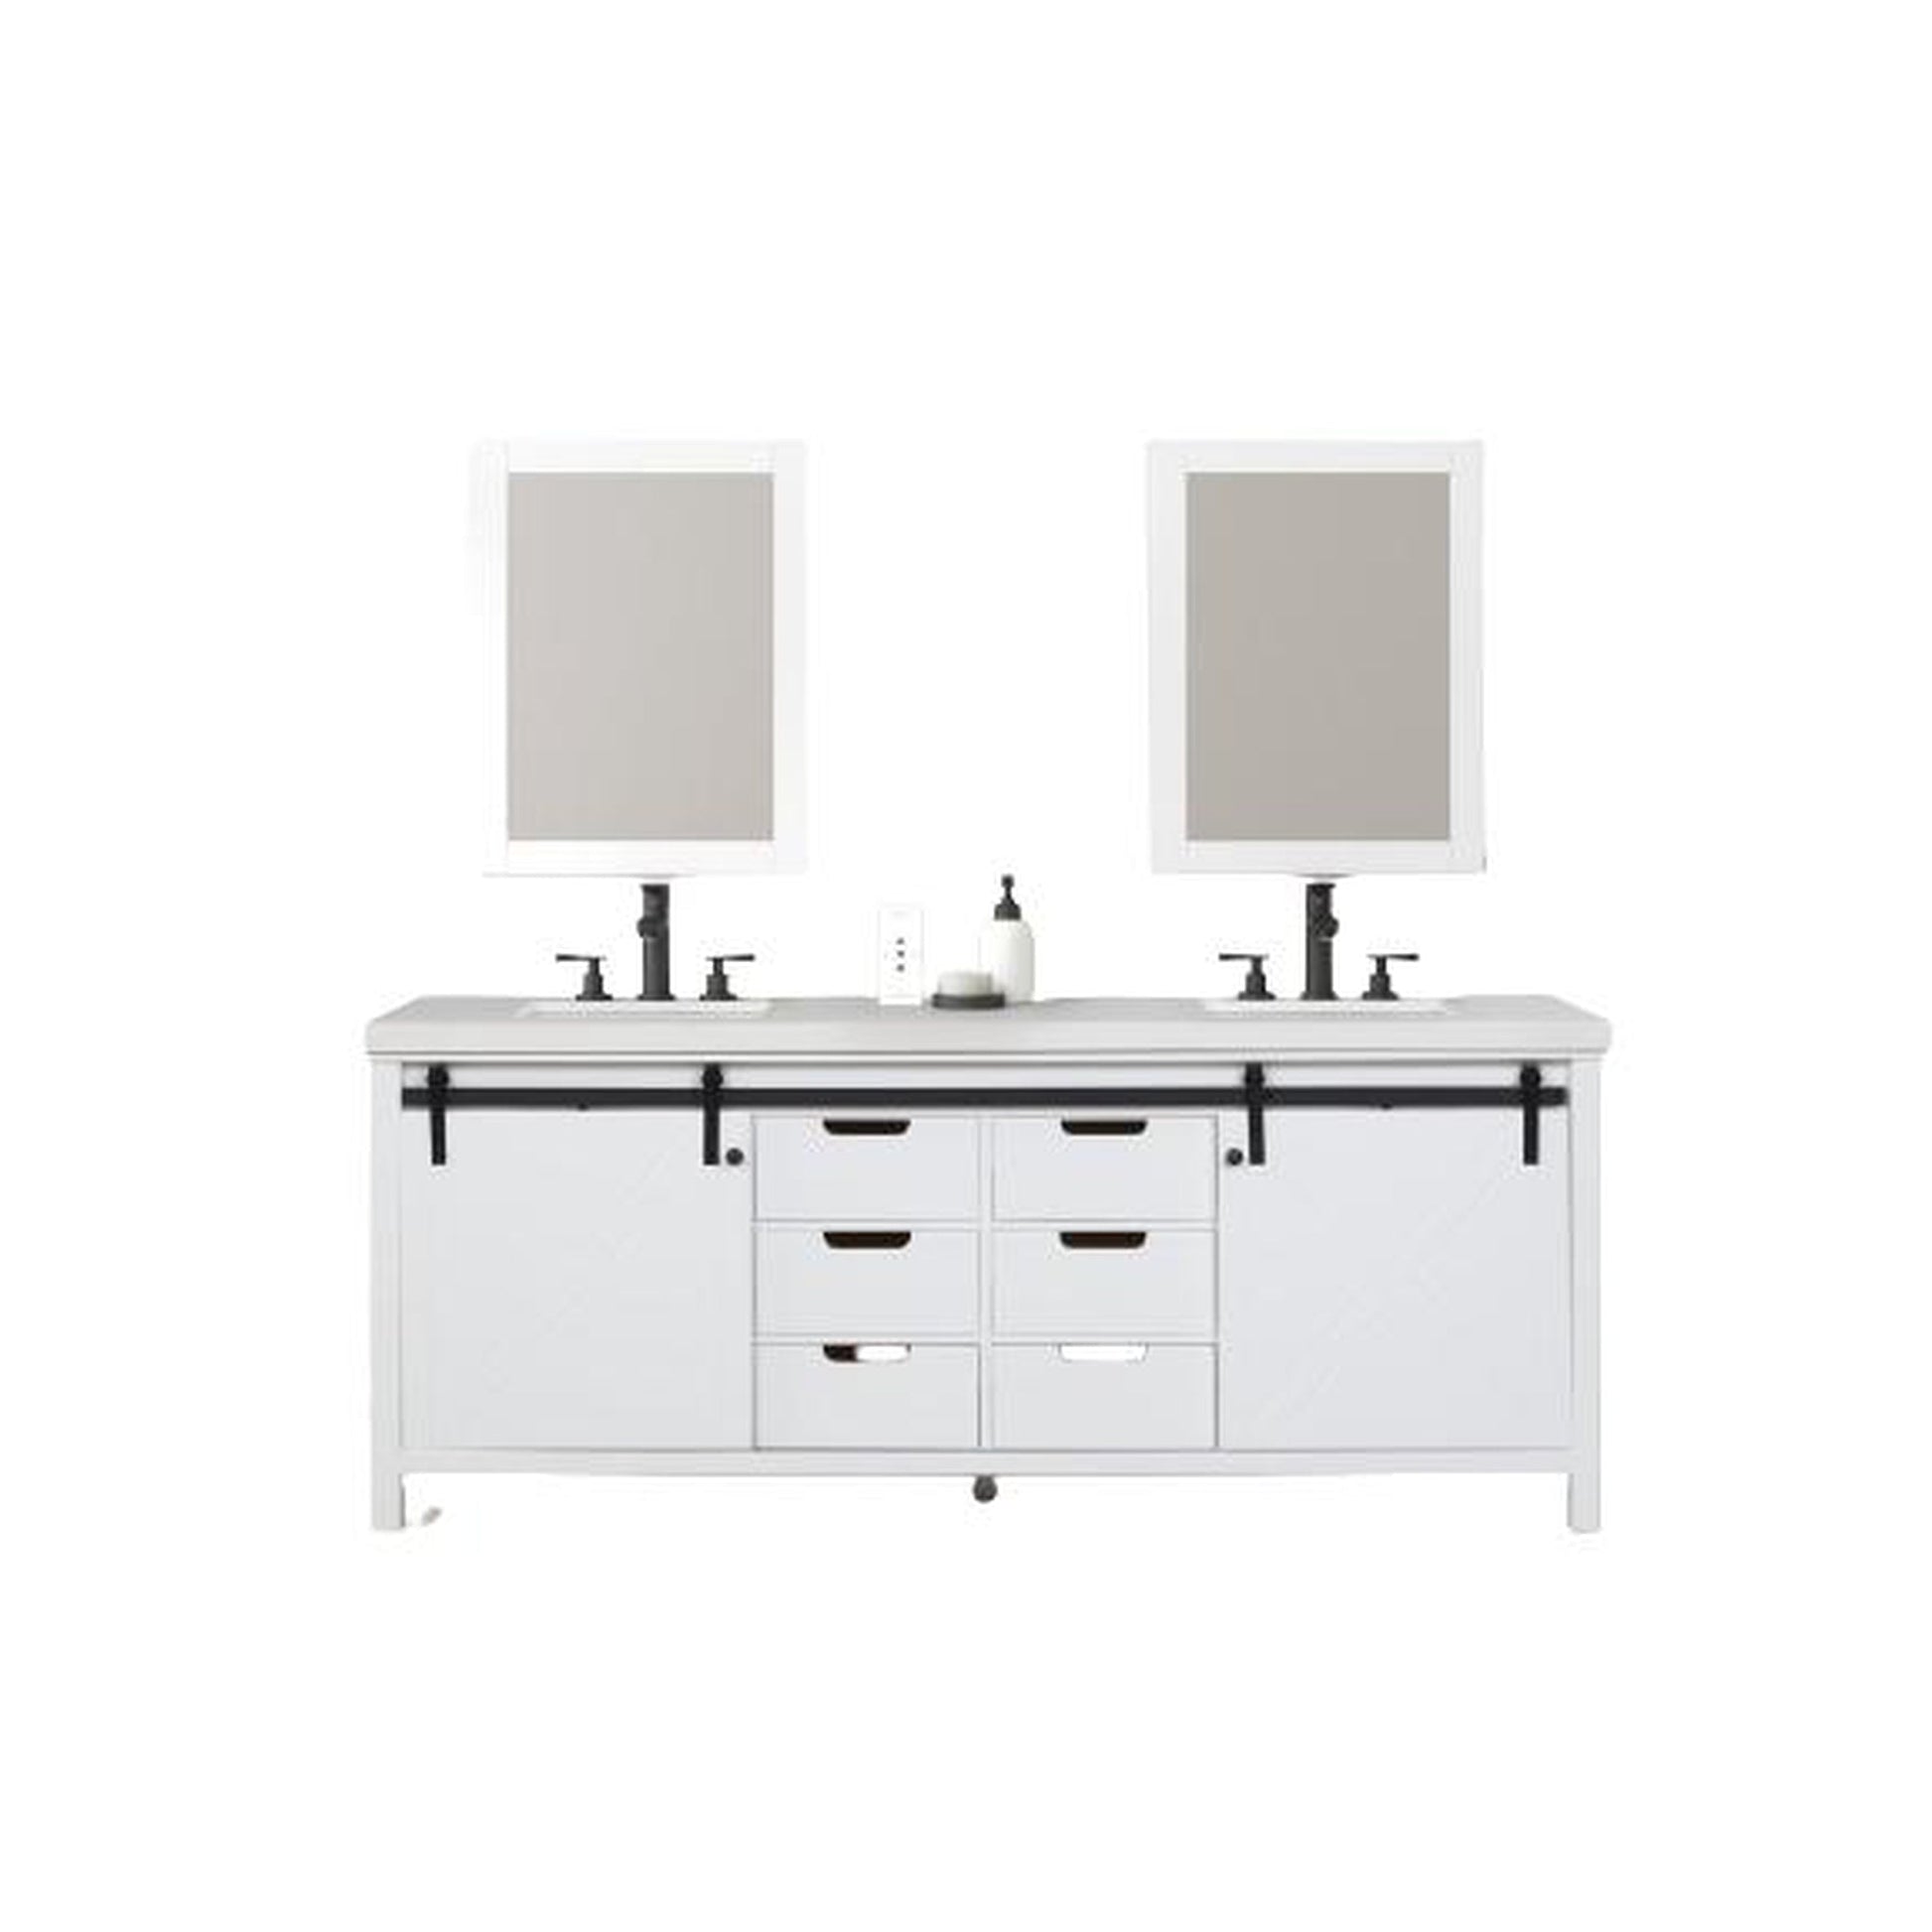 Eviva Dallas 84” x 34” White Freestanding Bathroom Vanity With White Granite Countertop and Double Undermount Sink